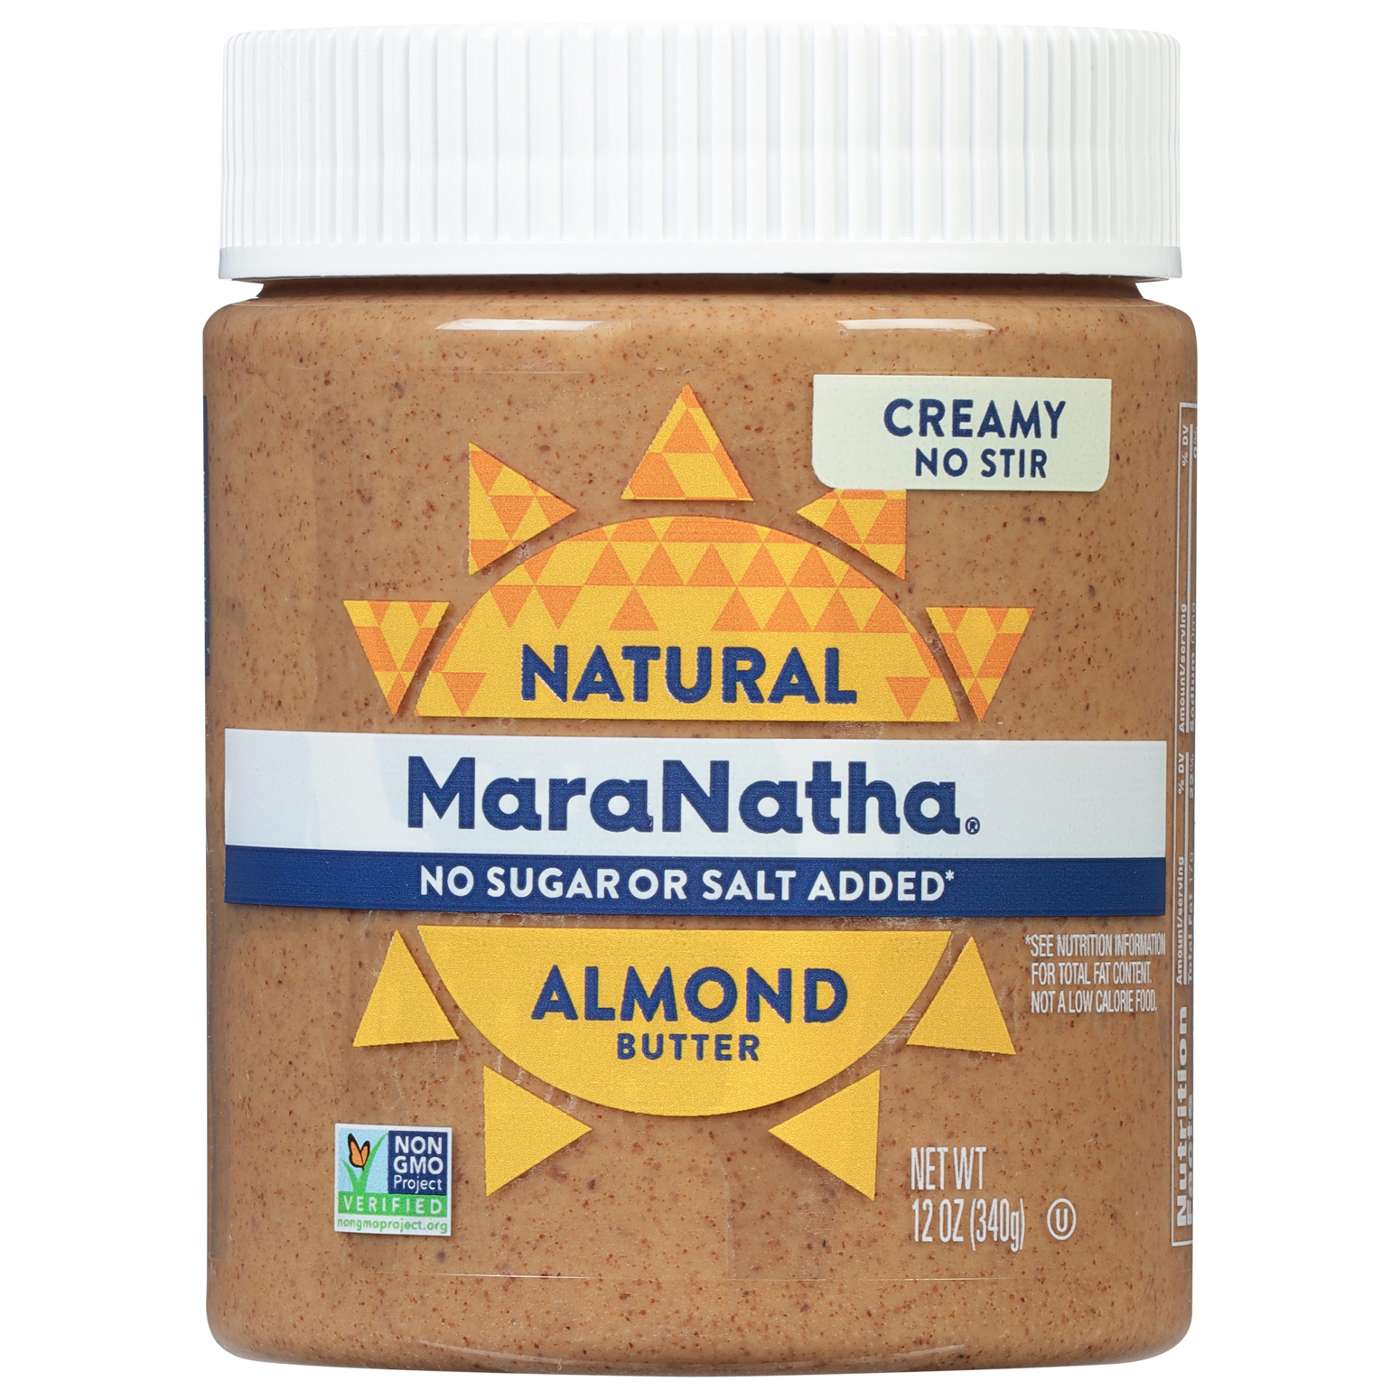 MaraNatha No Salt No Sugar Creamy Almond Butter; image 1 of 2